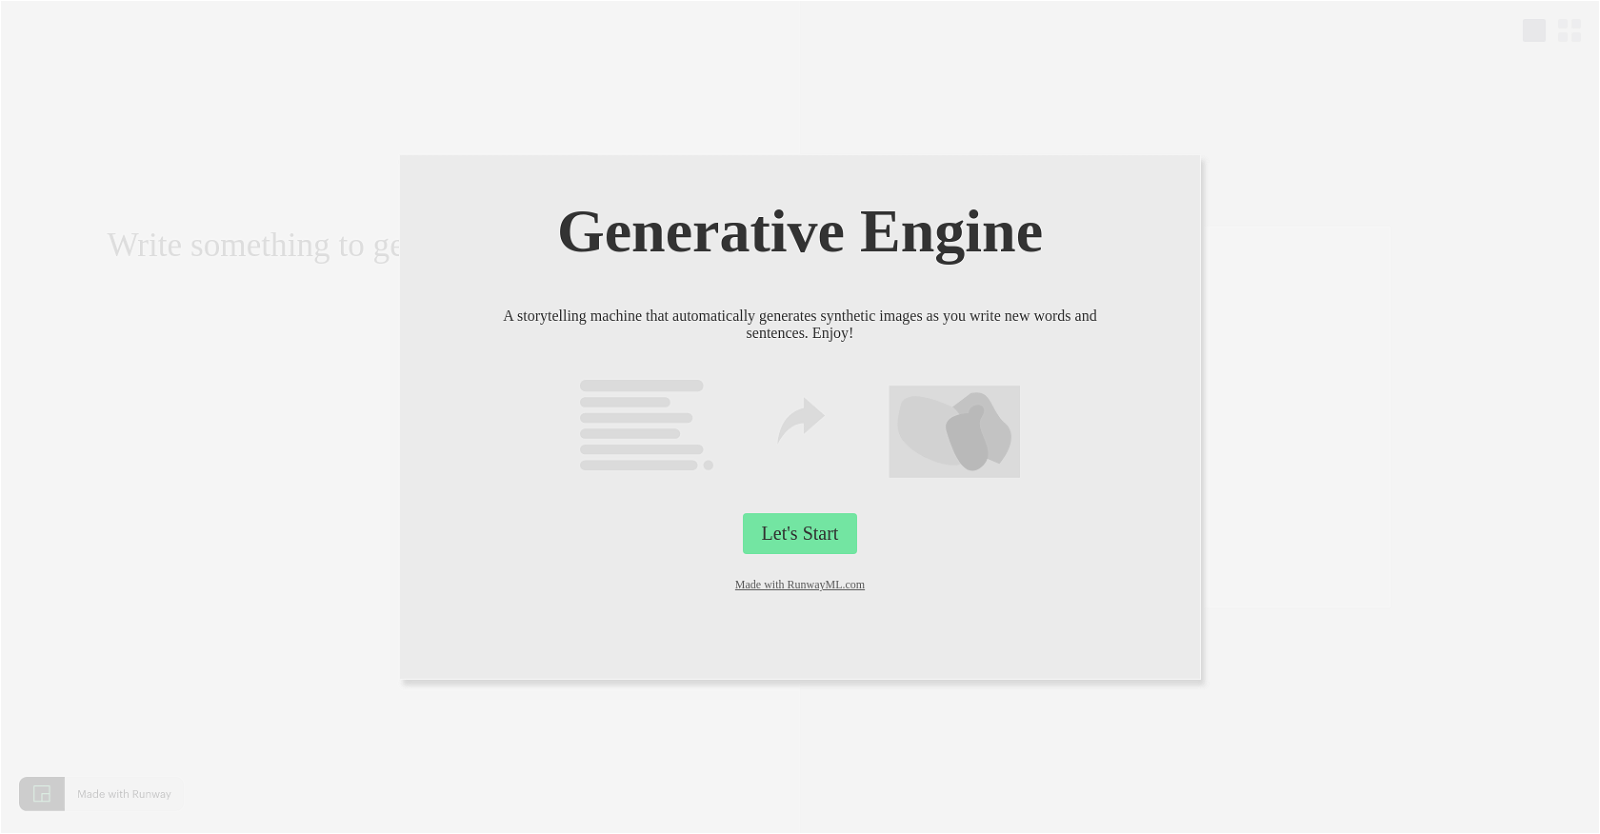 Generative_engine